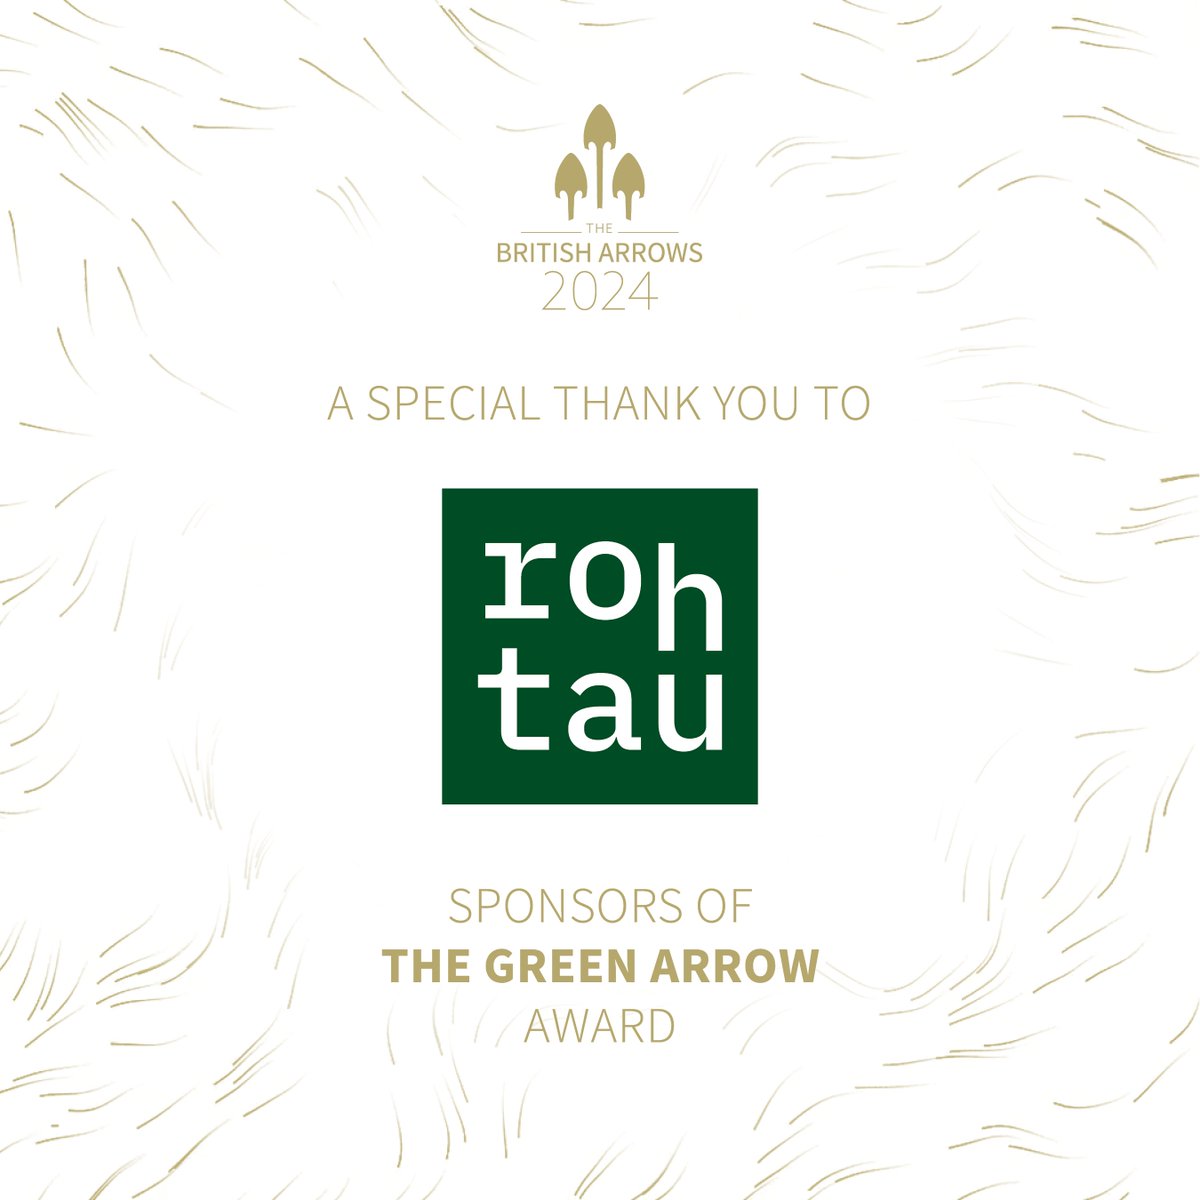 A special thank you to Rohtau Sponsors of The Green Arrow Award #BA23 #BA23 #BritishArrows #advertising #award #celebration